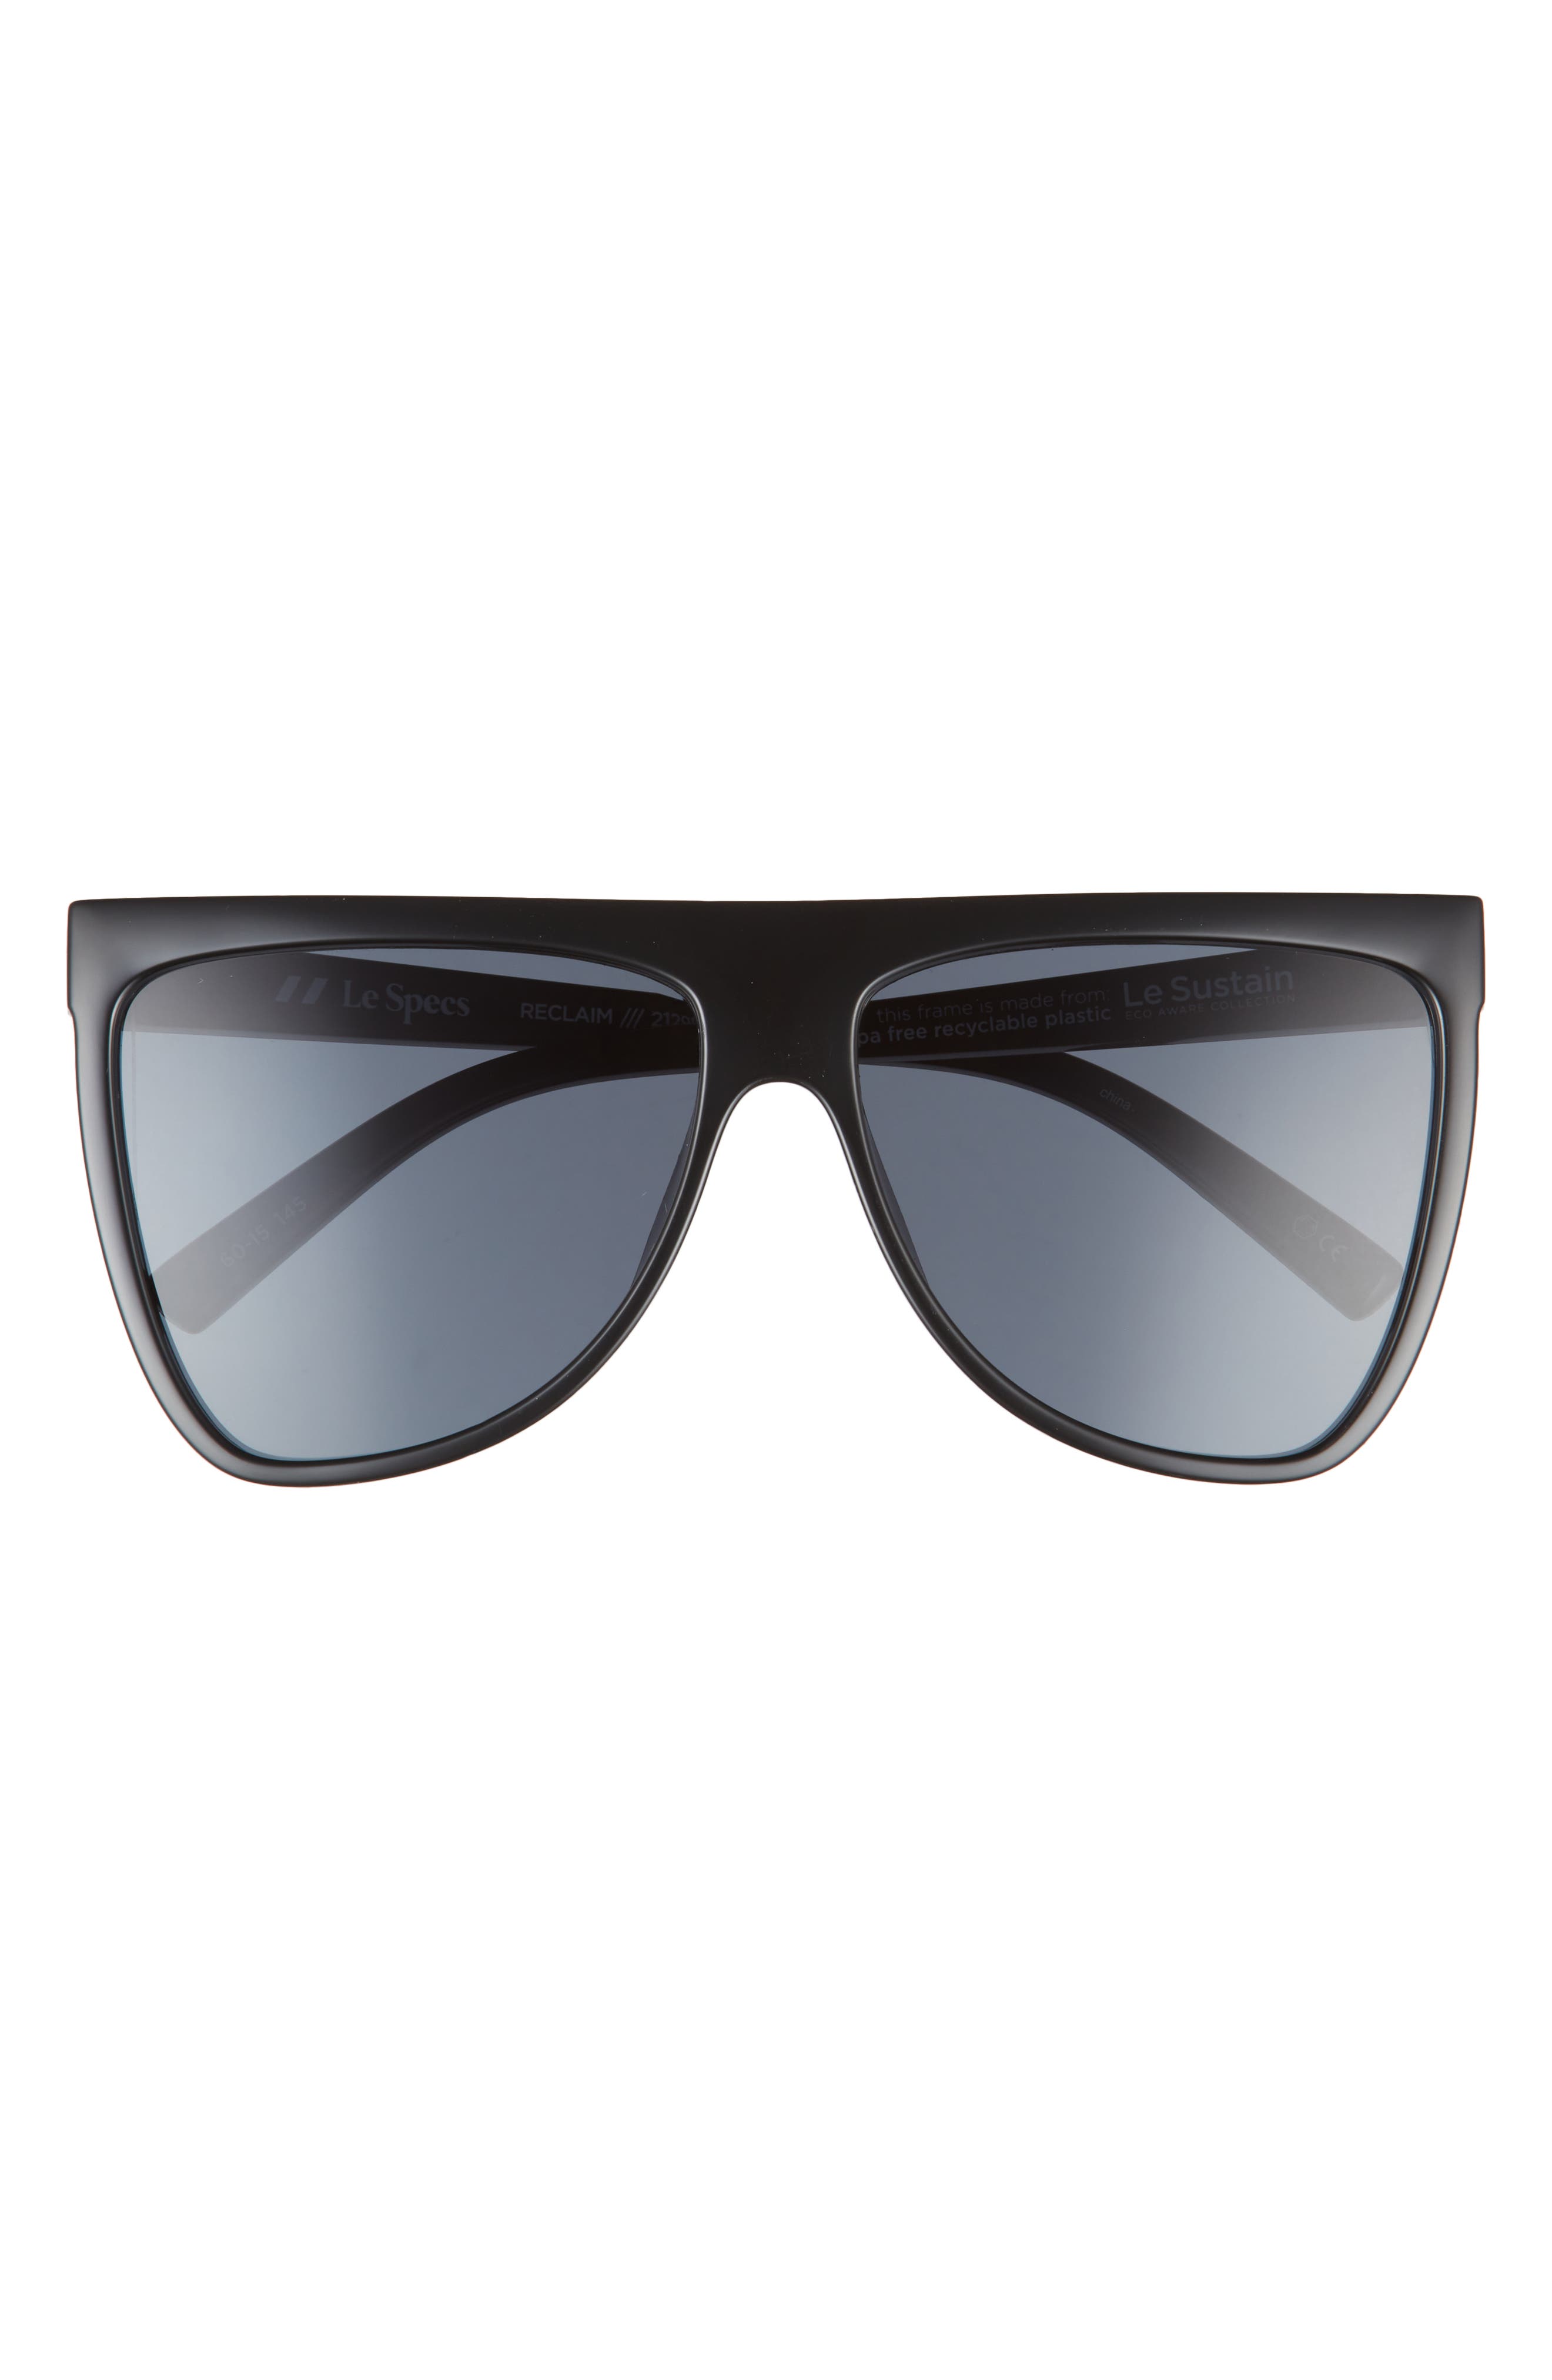 Le Specs Reclaim 60mm Flat Top Sunglasses in Black/Smoke Mono at Nordstrom